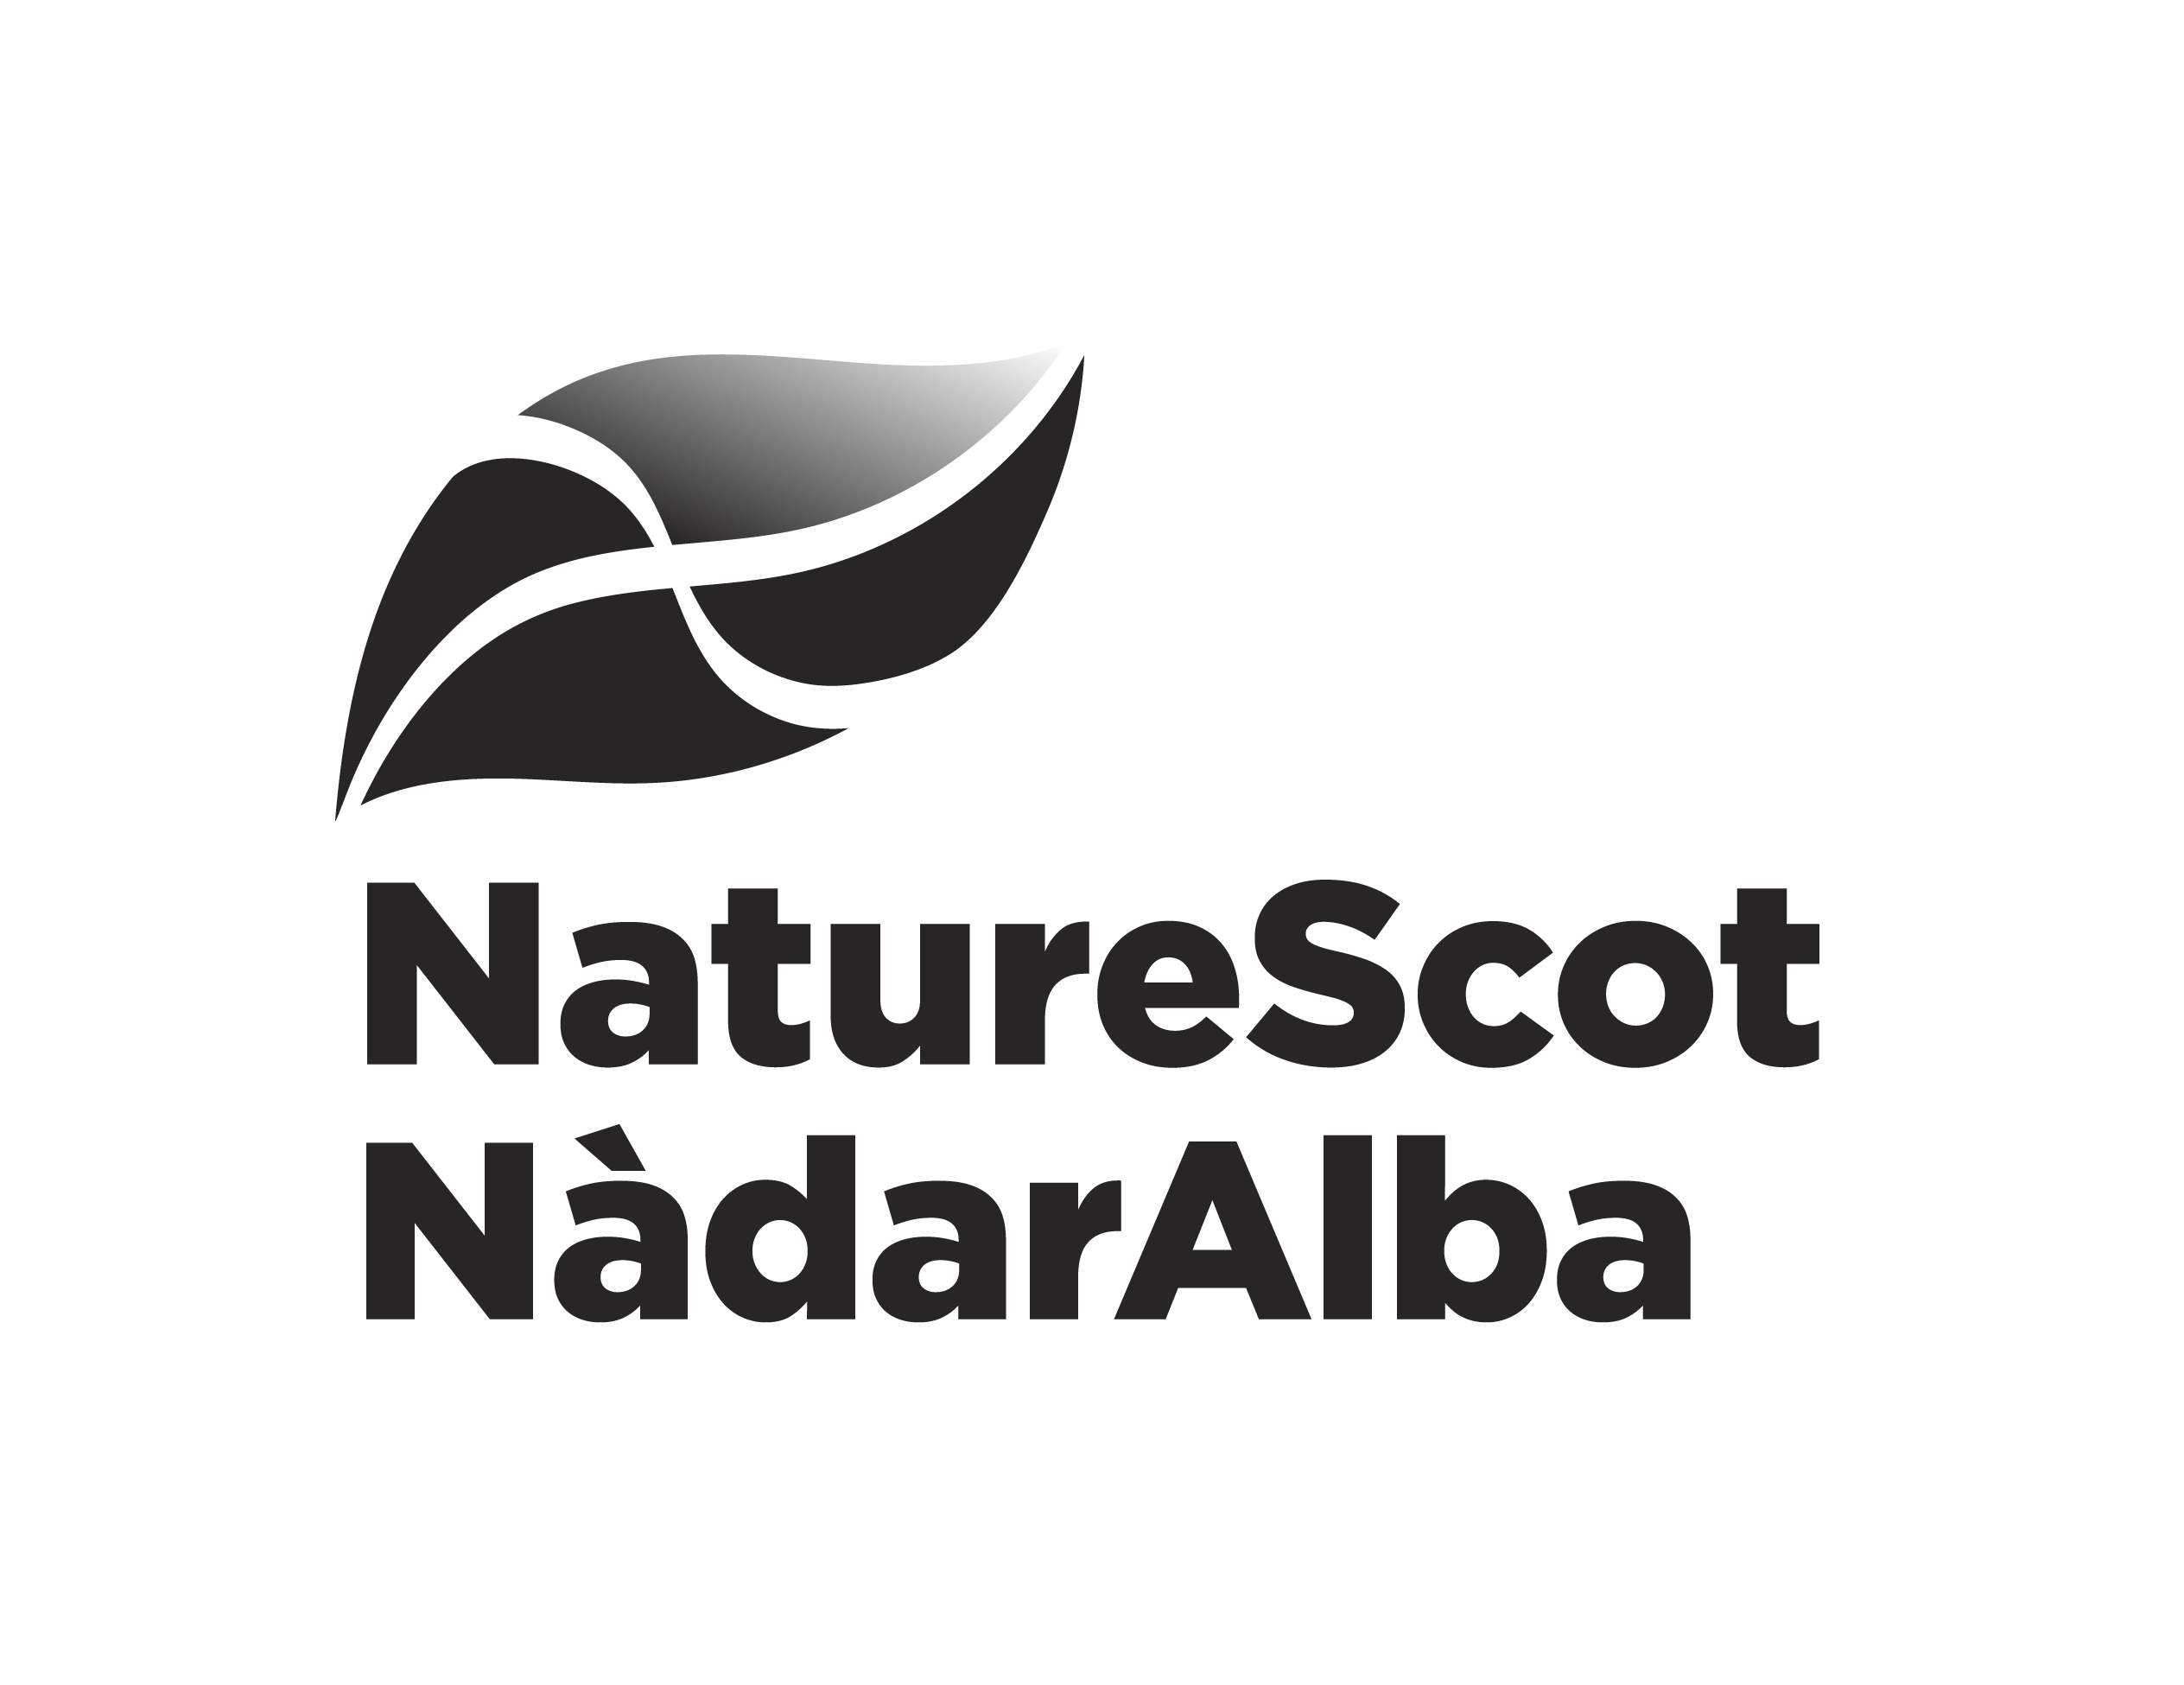 NatureScot simple black and white logo